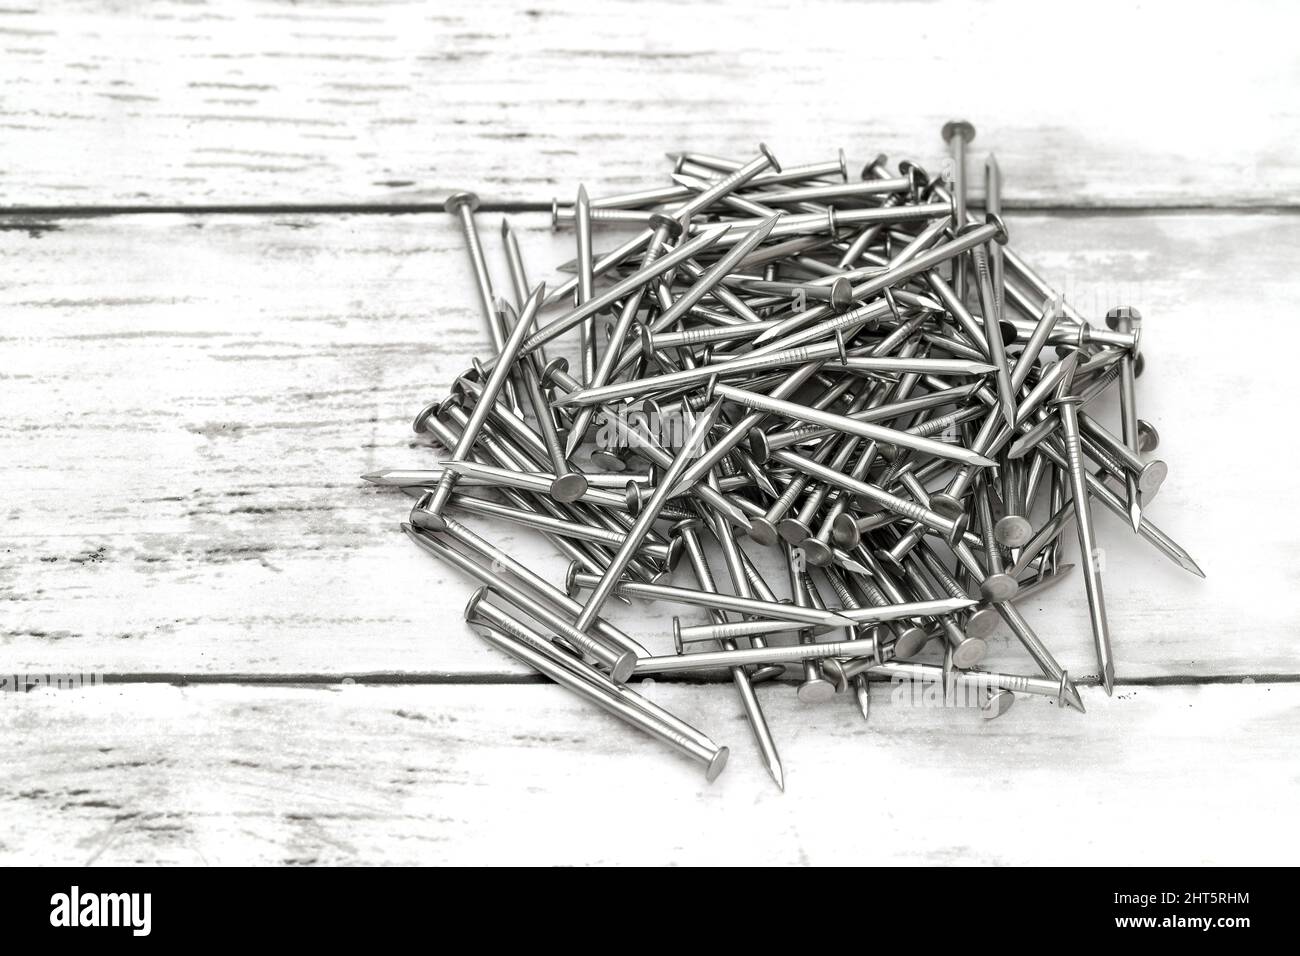 Pile of silver metallic nails on white wooden background Stock Photo